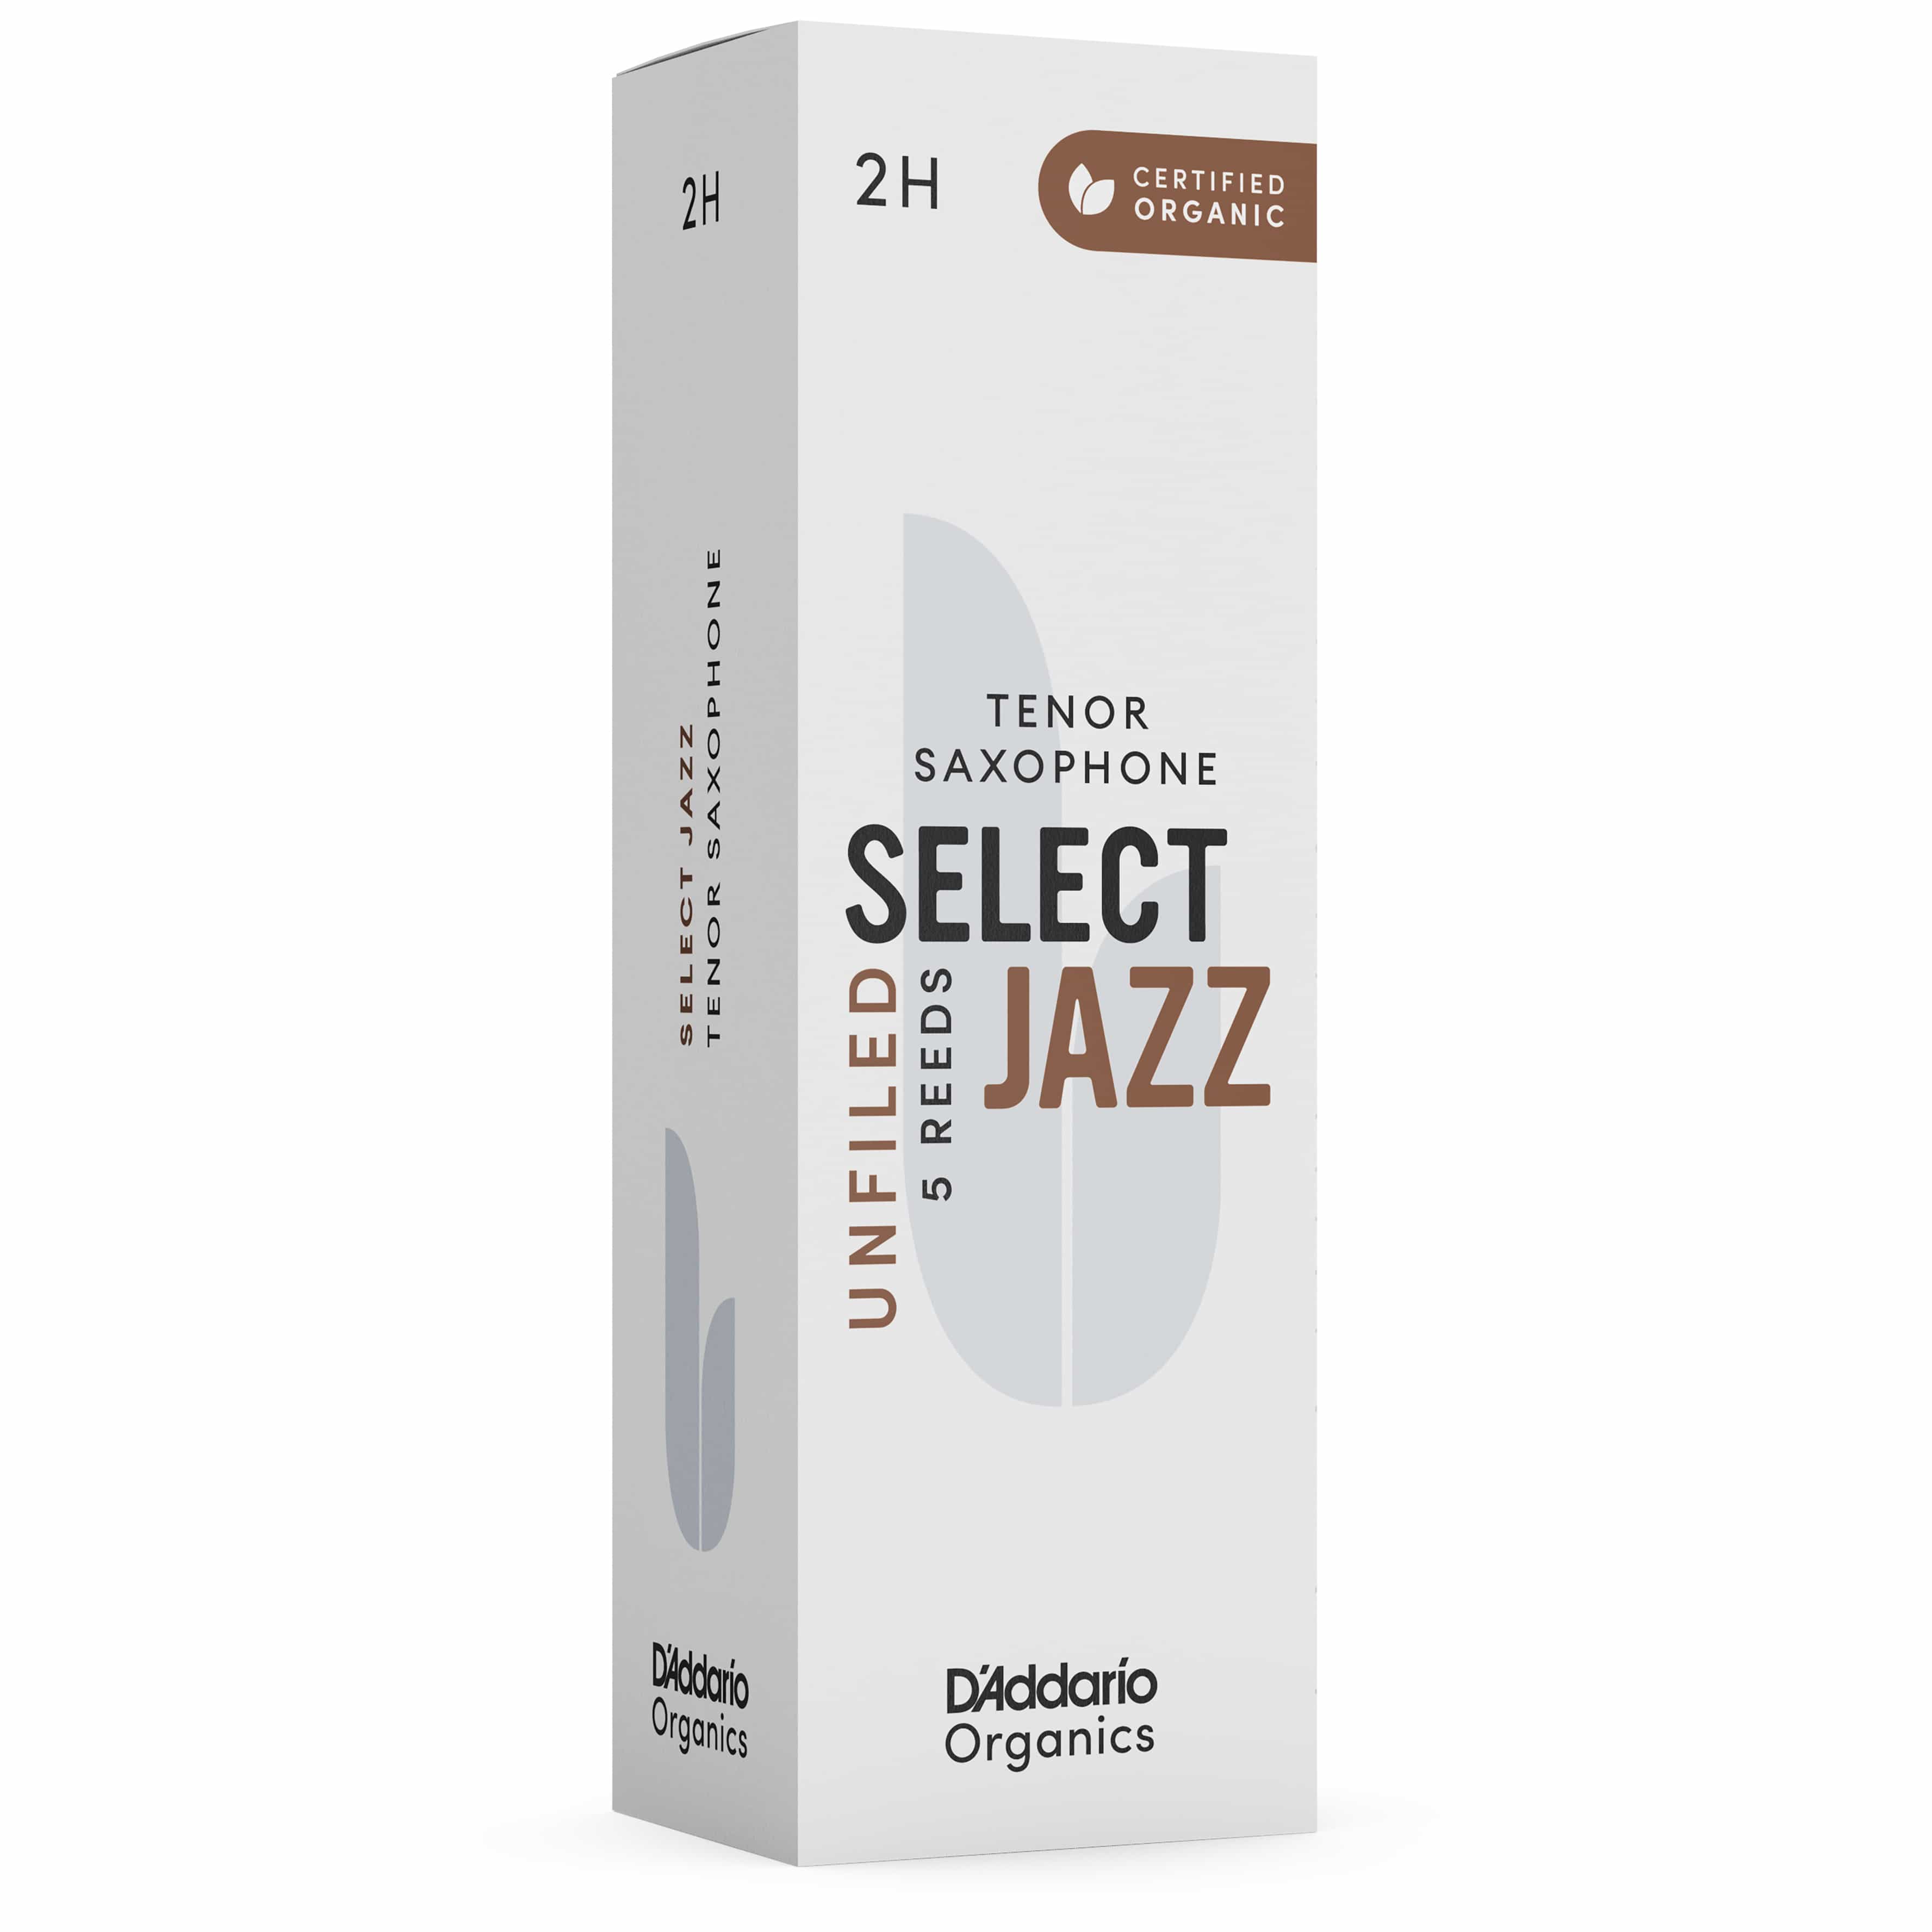 D’Addario Woodwinds Organic Select Jazz Unfiled - Tenor Saxophone 2H - 5er Pack 3